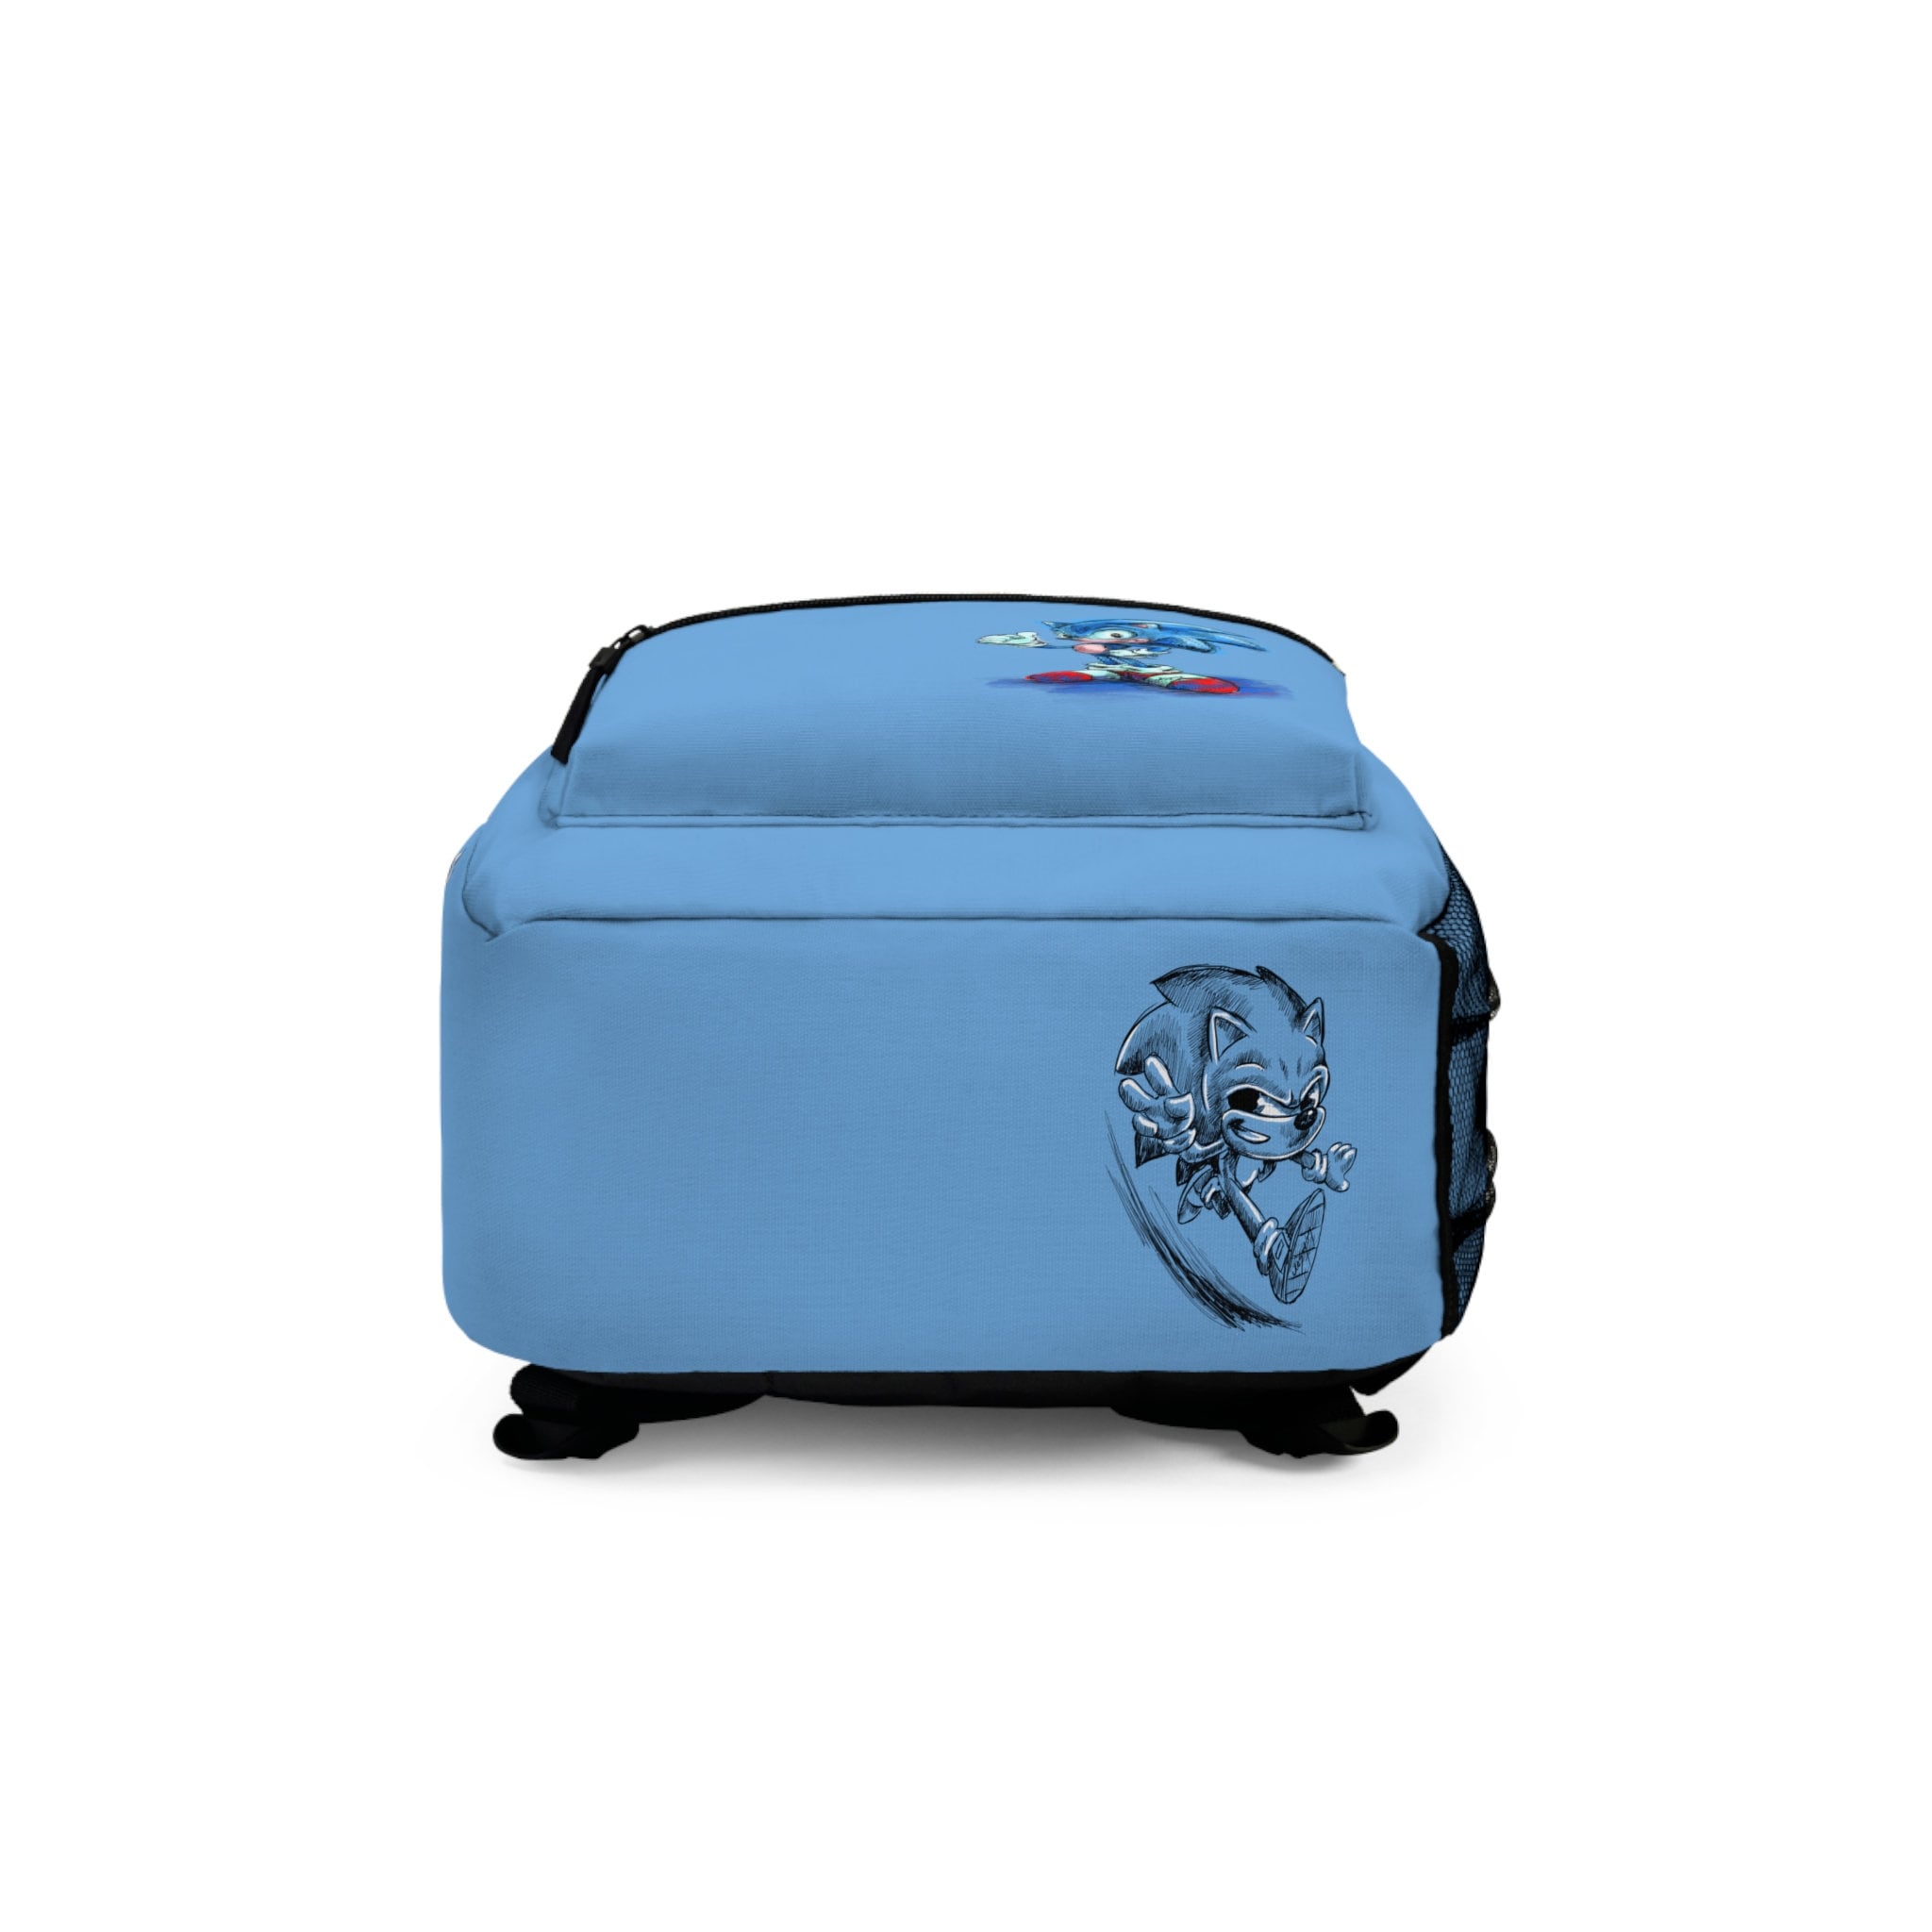 Sonic Blue School Backpack, Blue School Bag